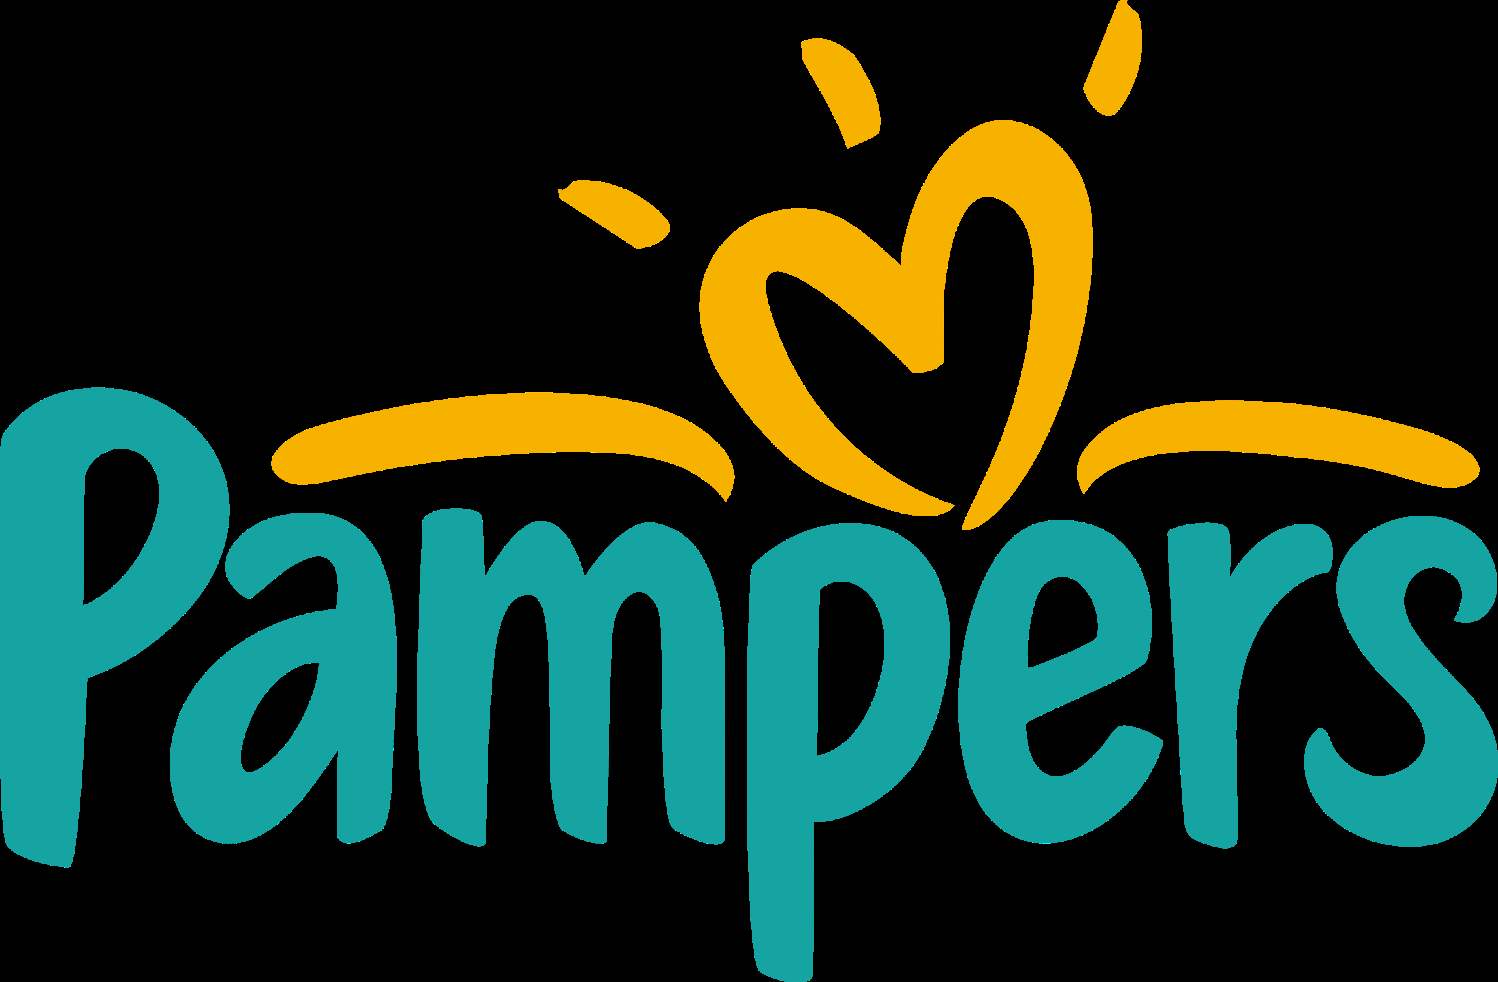 Pampers Logo - Pampers Logo | Pampers Logo Design Vector Free Download